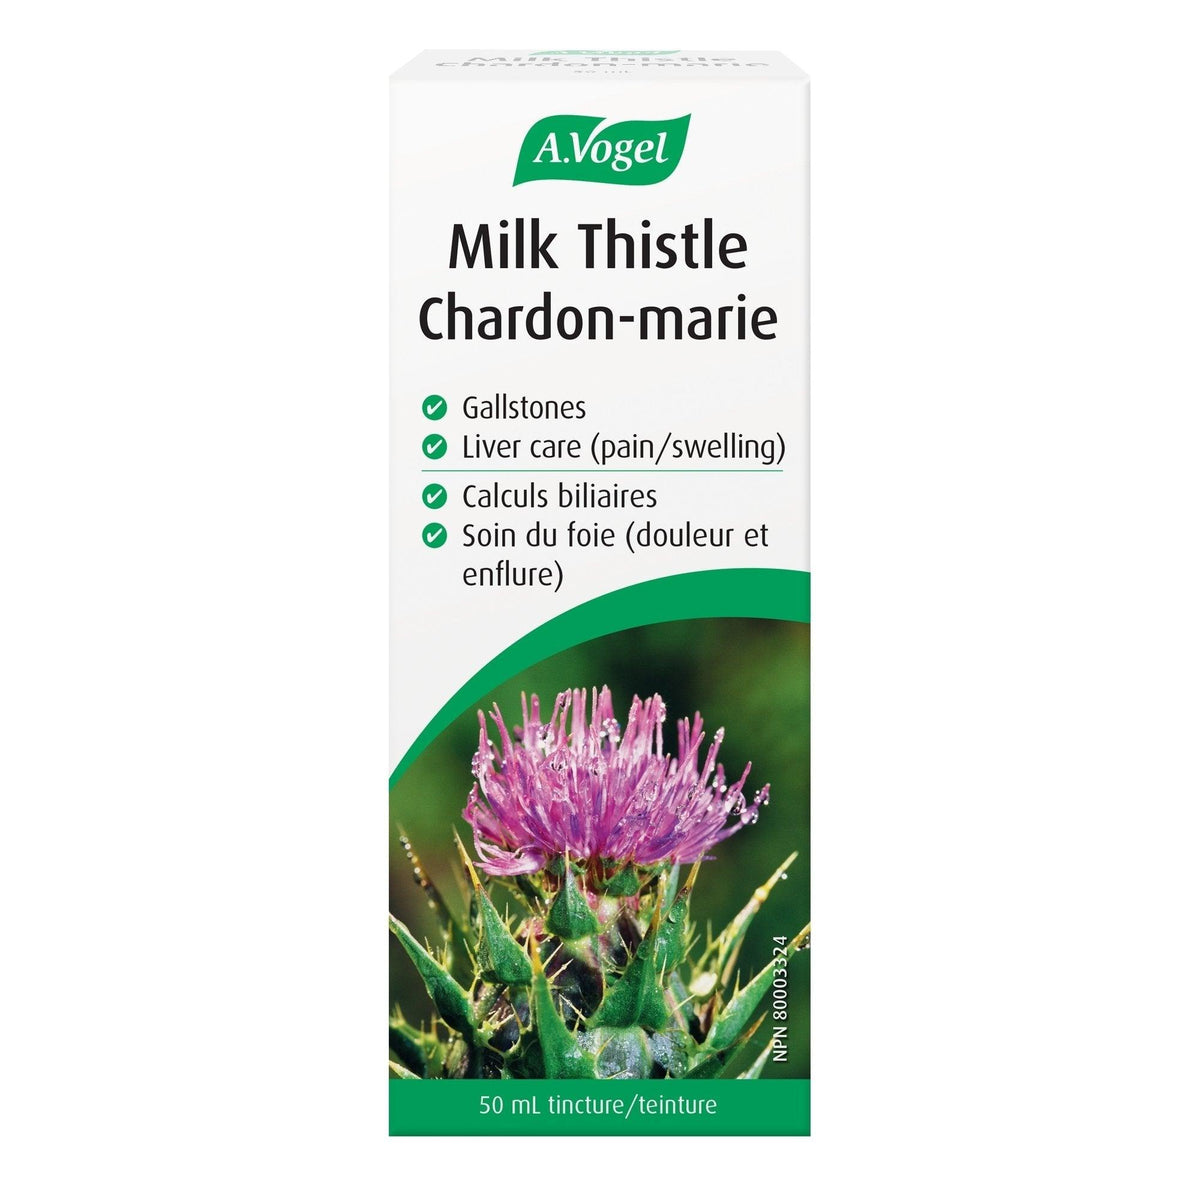 A. Vogel Milk Thistle, 50ml Supplements - Liver Care at Village Vitamin Store